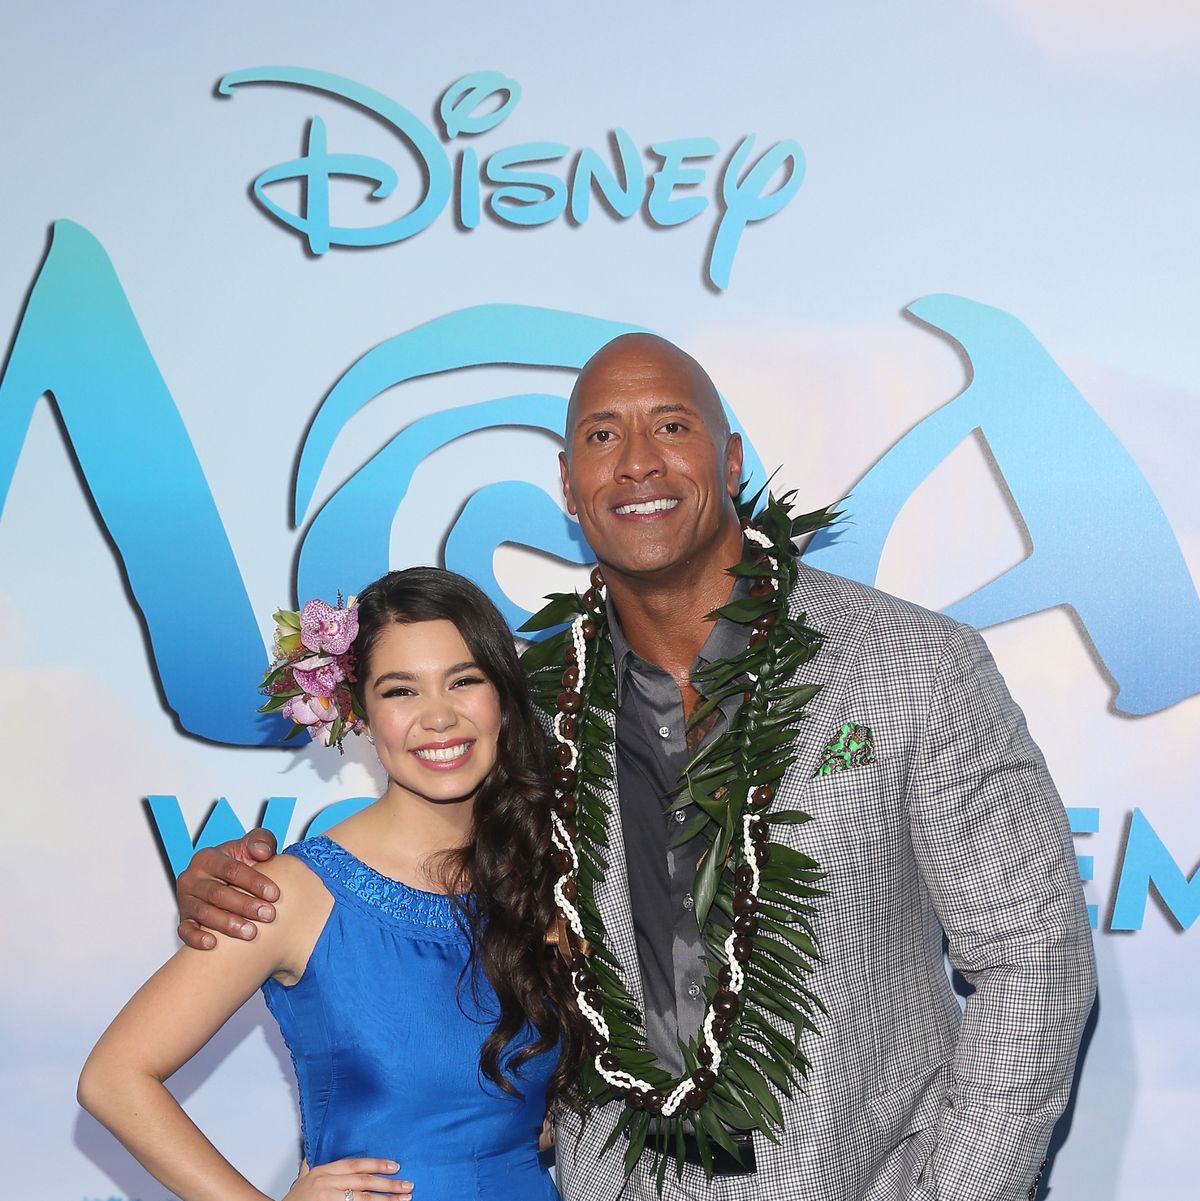 Moana: Dwayne Johnson Confirms Disney's Live-Action Remake Is His Next Movie